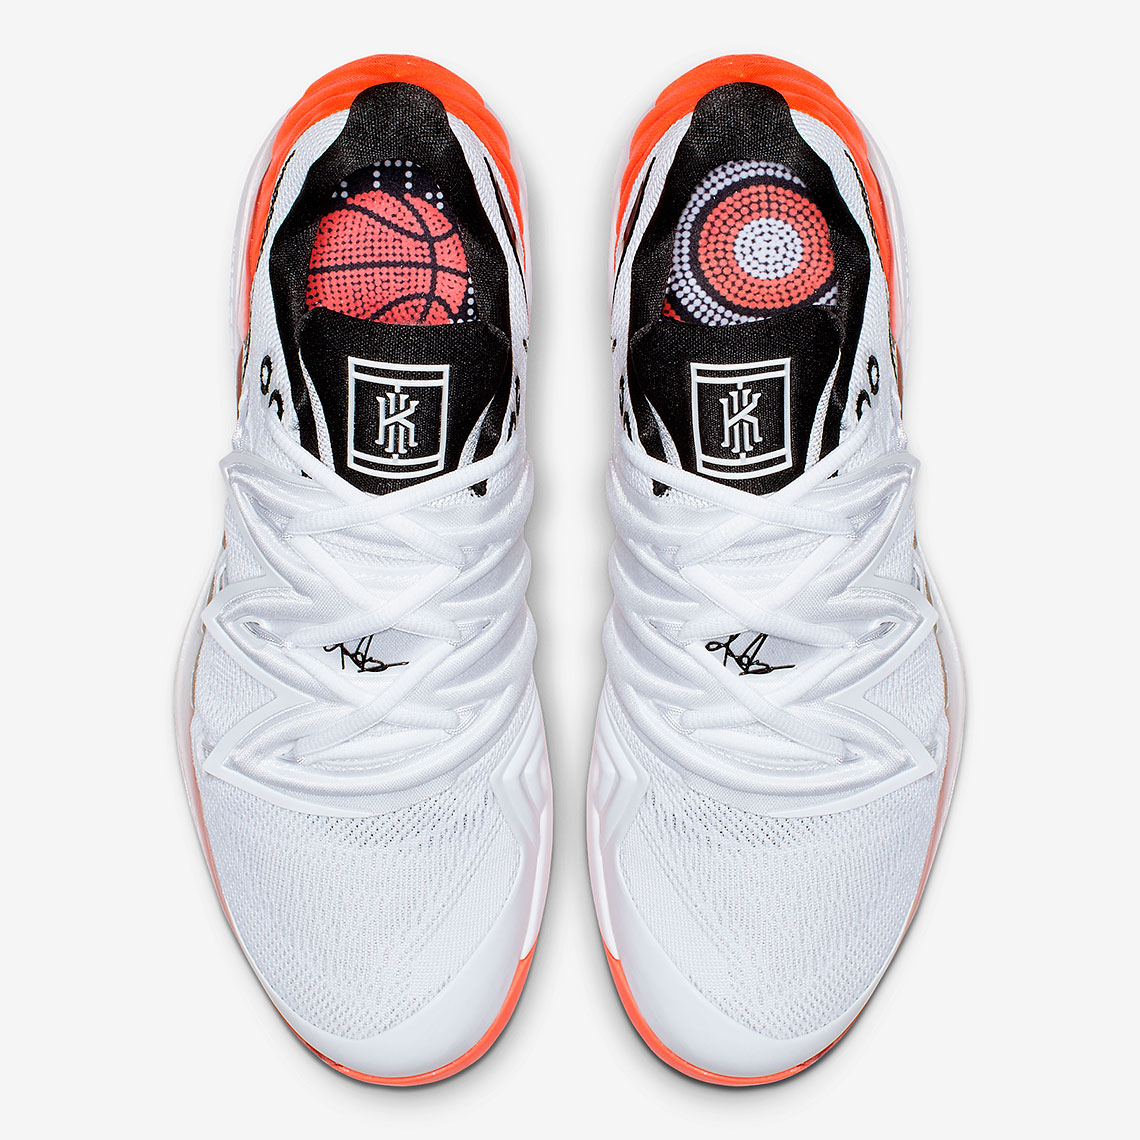 Nike Vapor X Kyrie 5 Hot Lava Release Date | SneakerNews.com